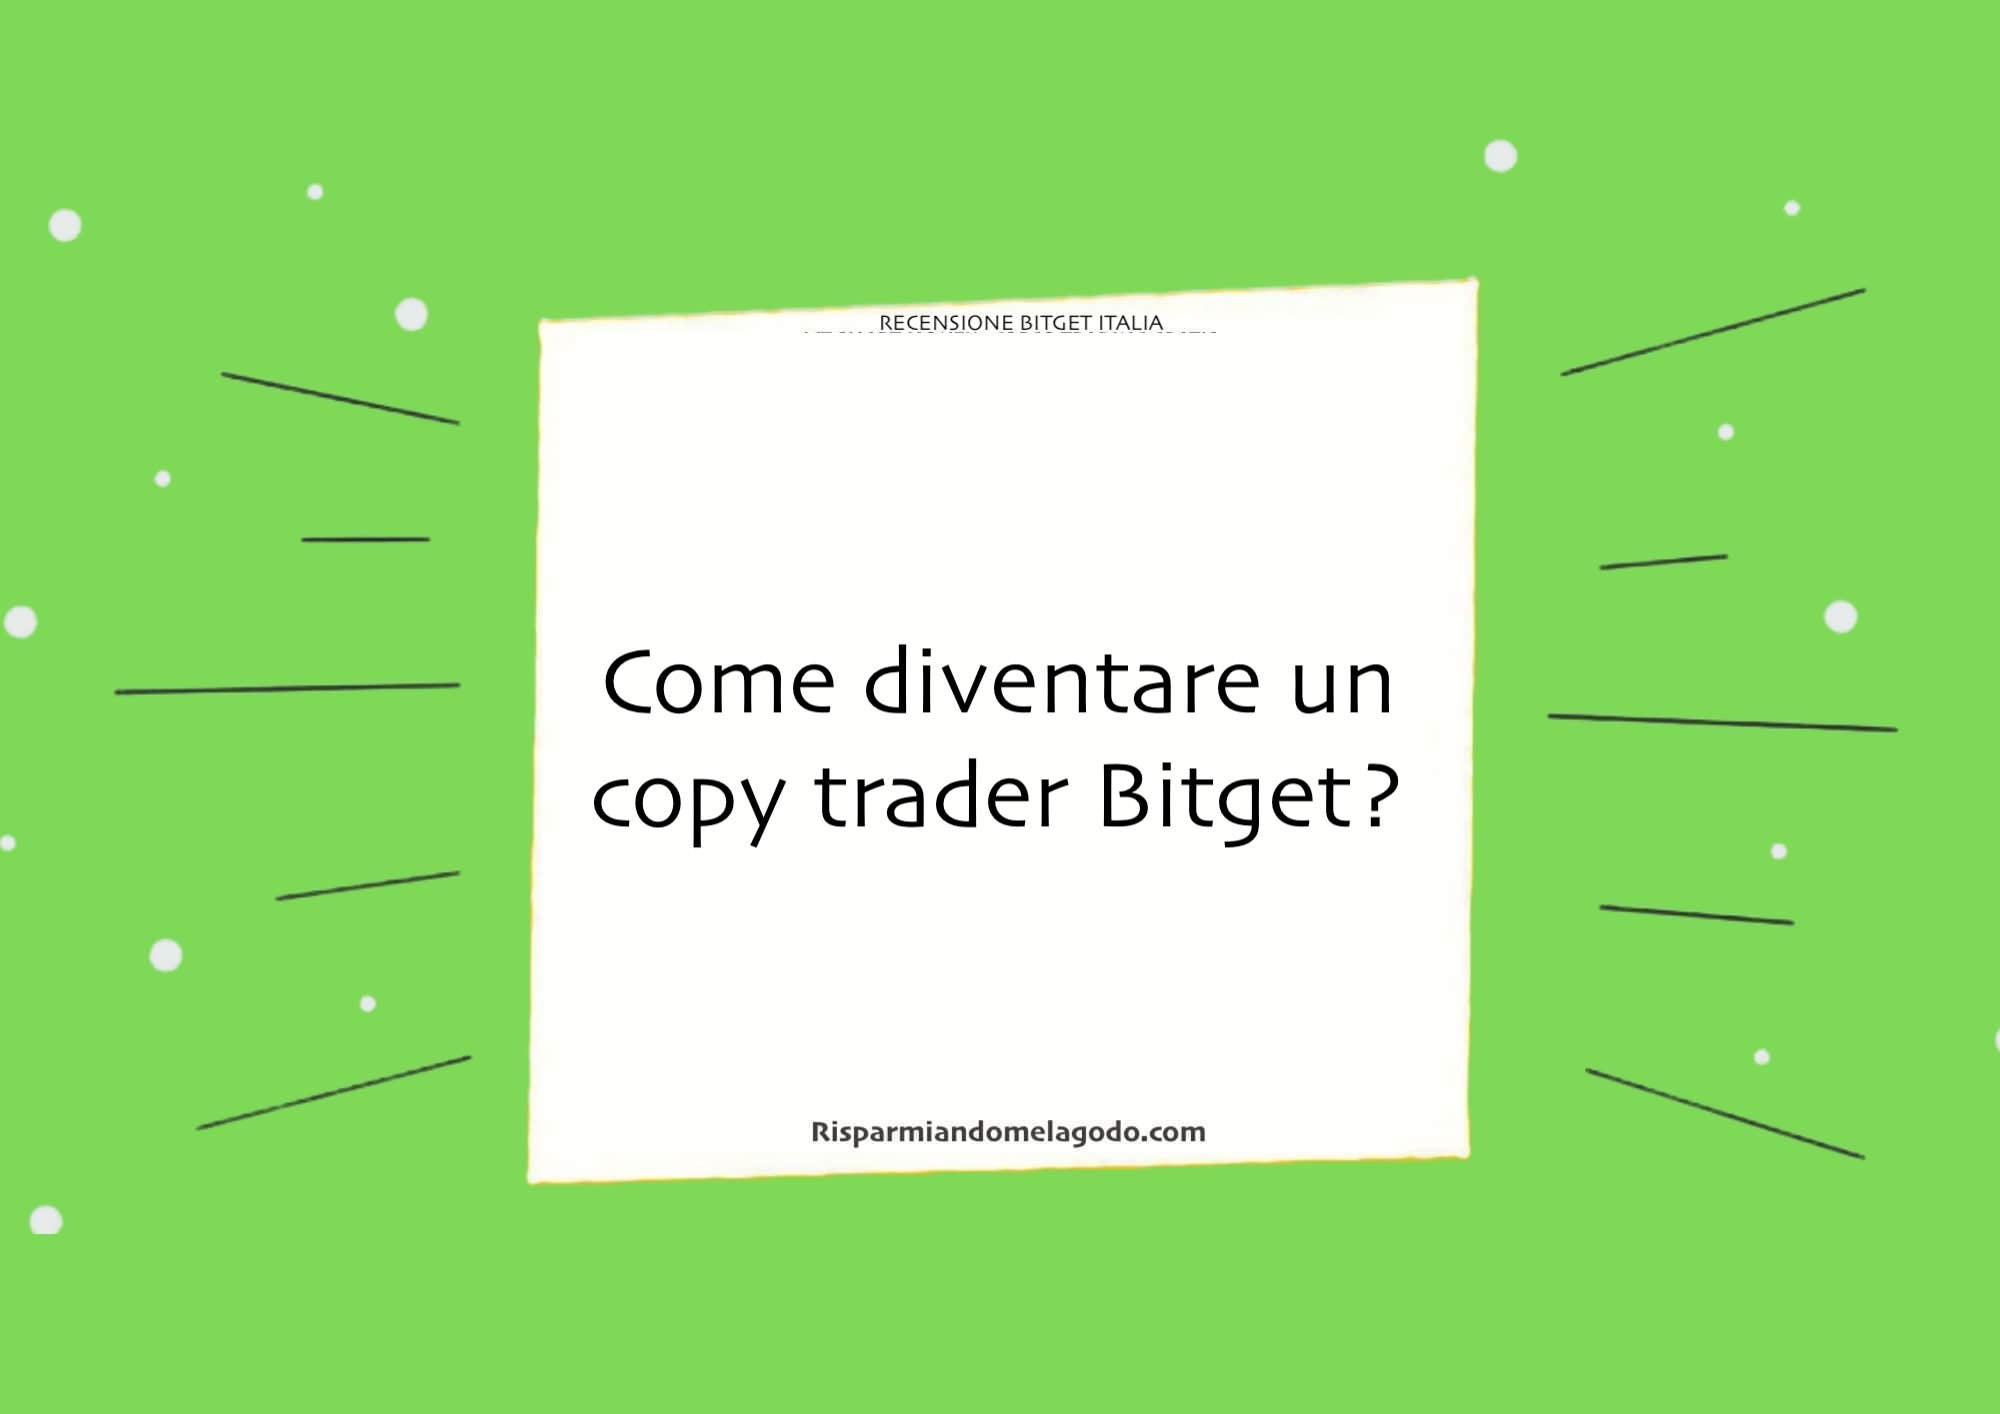 Come diventare un copy trader Bitget?